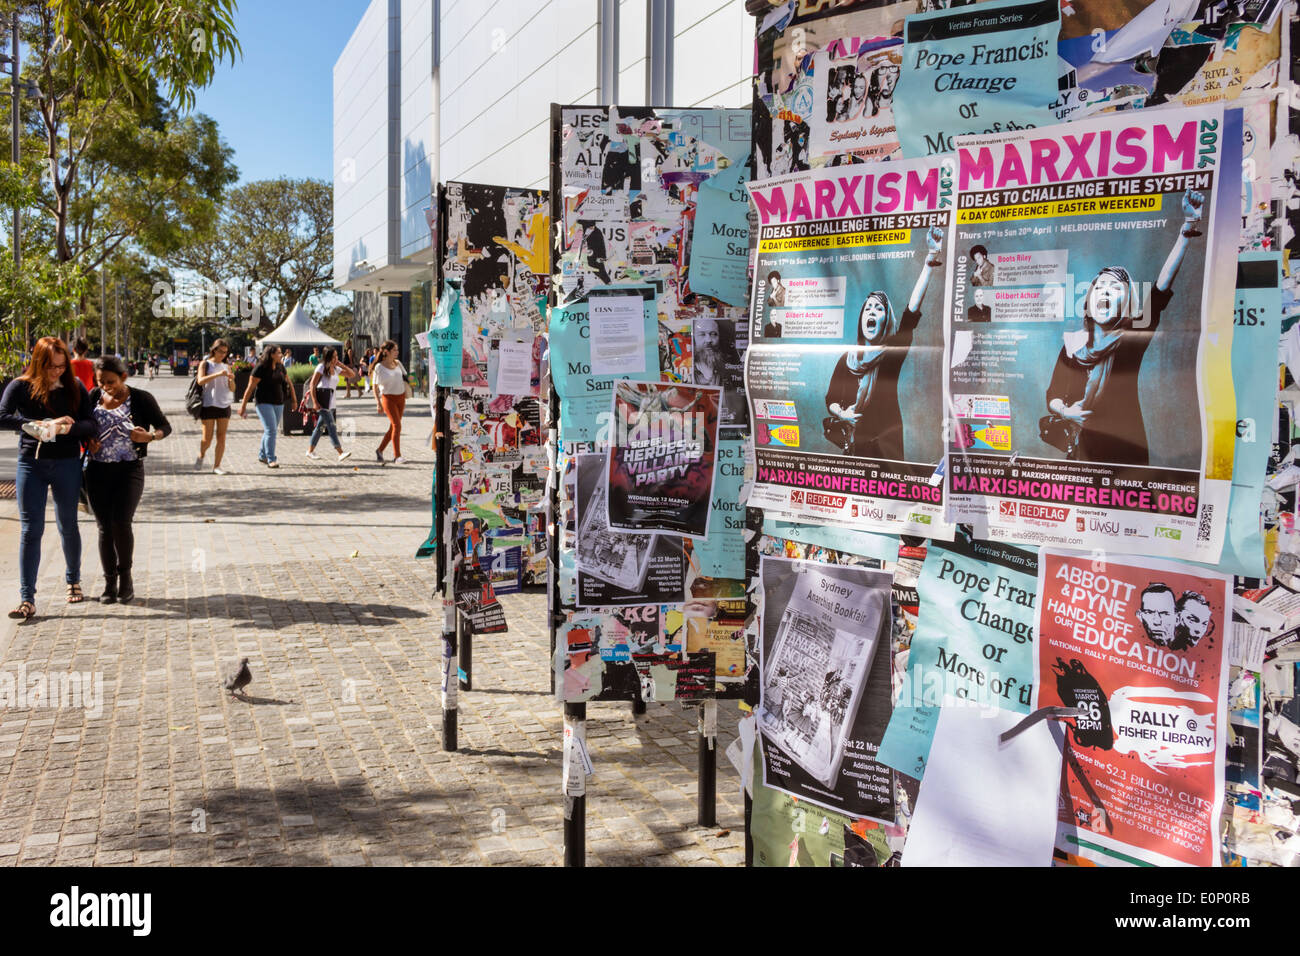 Sydney Australia,University of Sydney,education,campus,student students posters,bulletin board,Marxism,AU140310161 Stock Photo